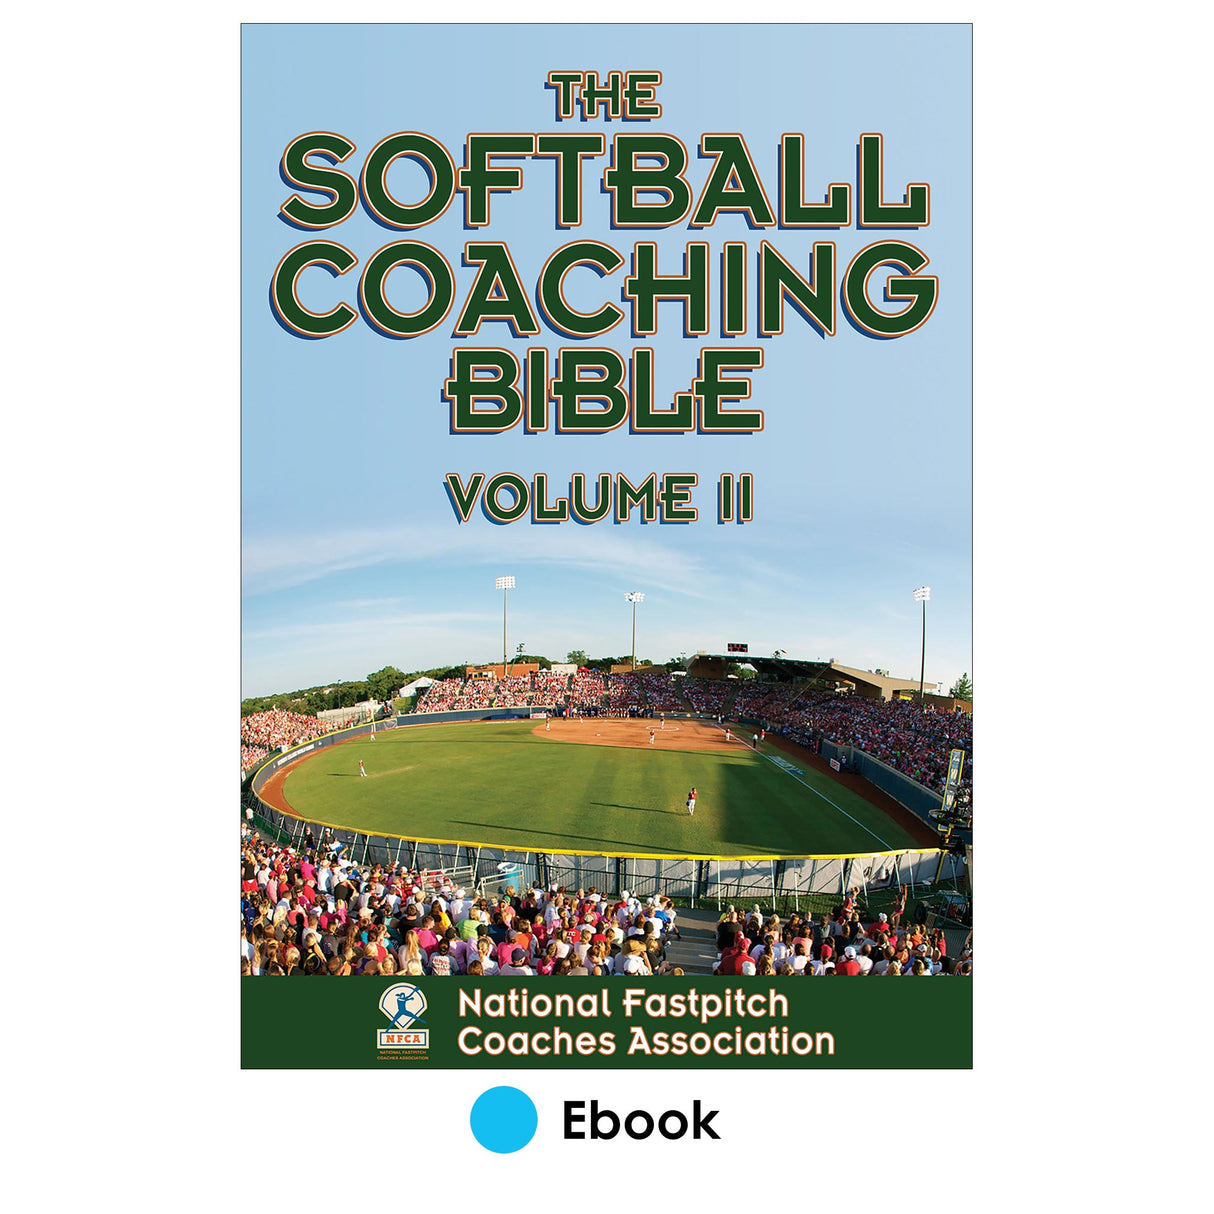 Softball Coaching Bible Volume II PDF, The